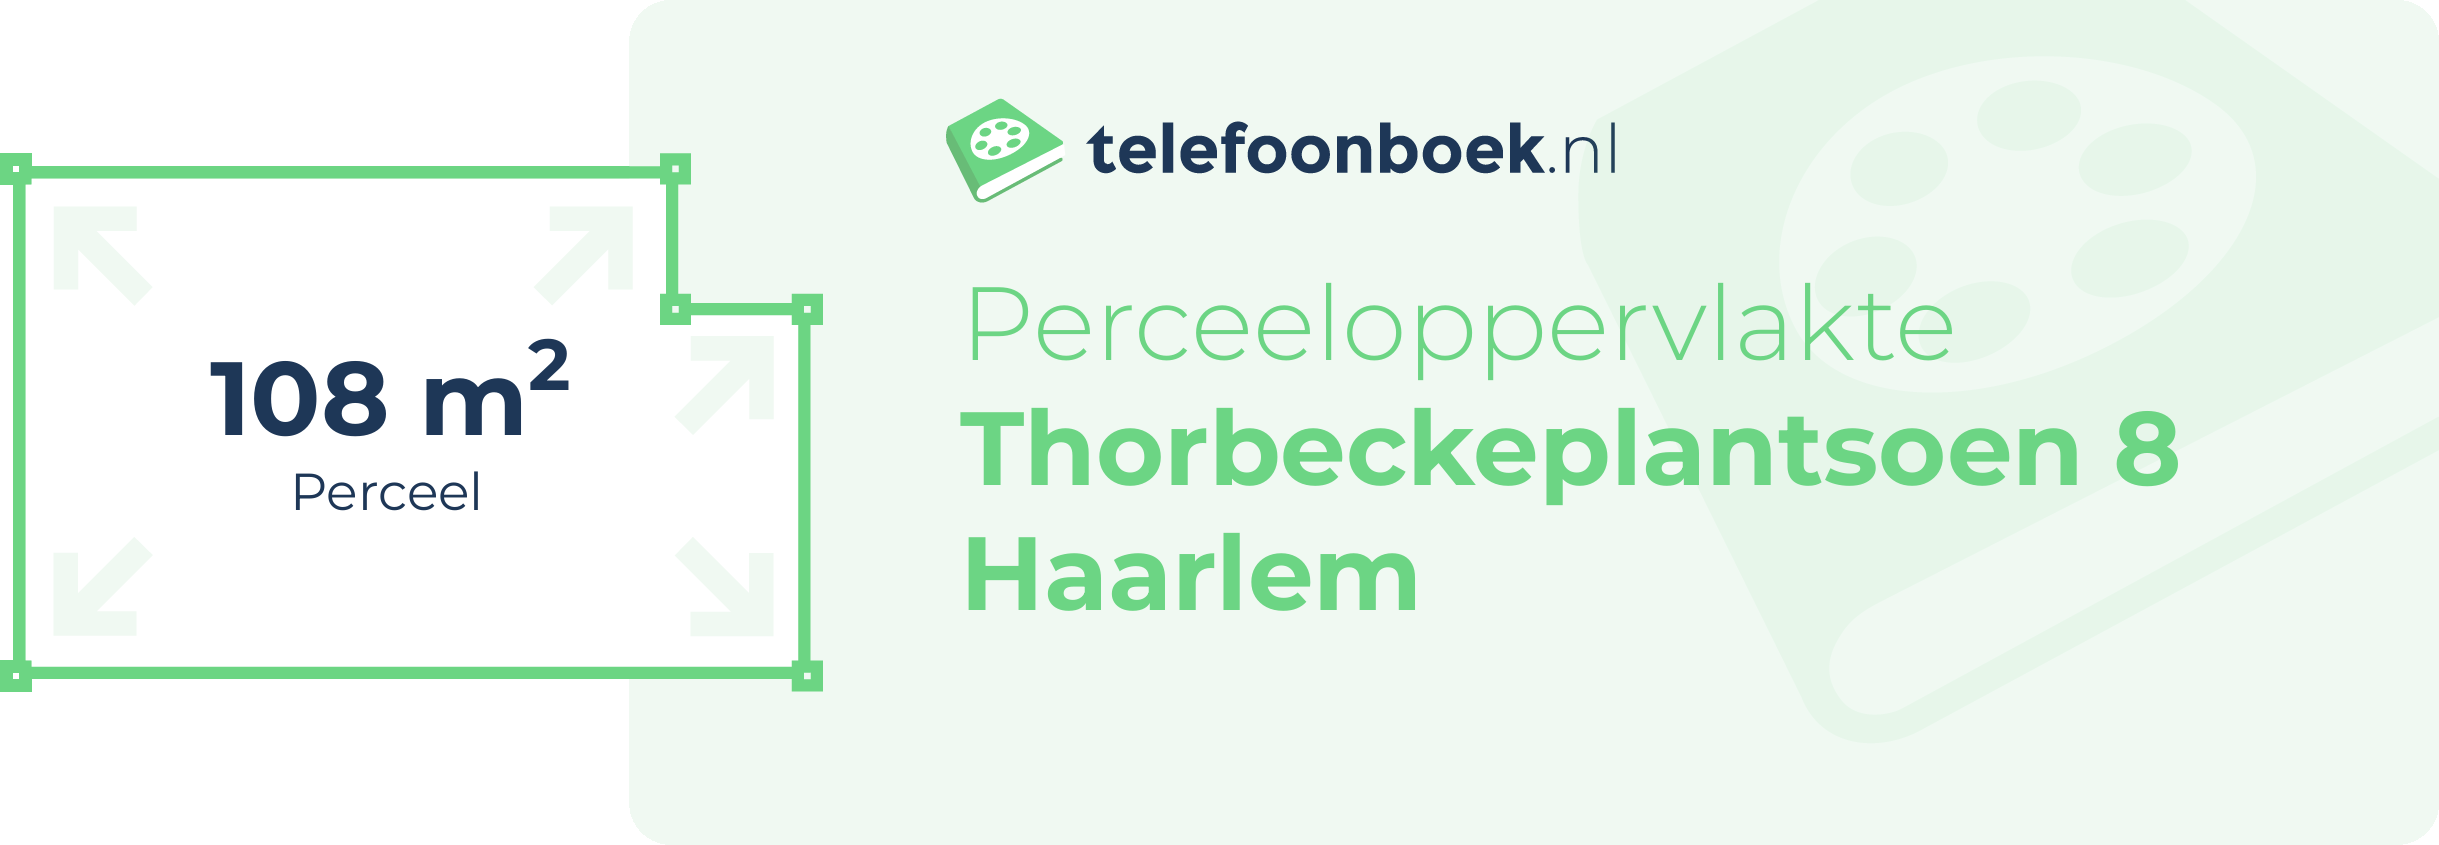 Perceeloppervlakte Thorbeckeplantsoen 8 Haarlem